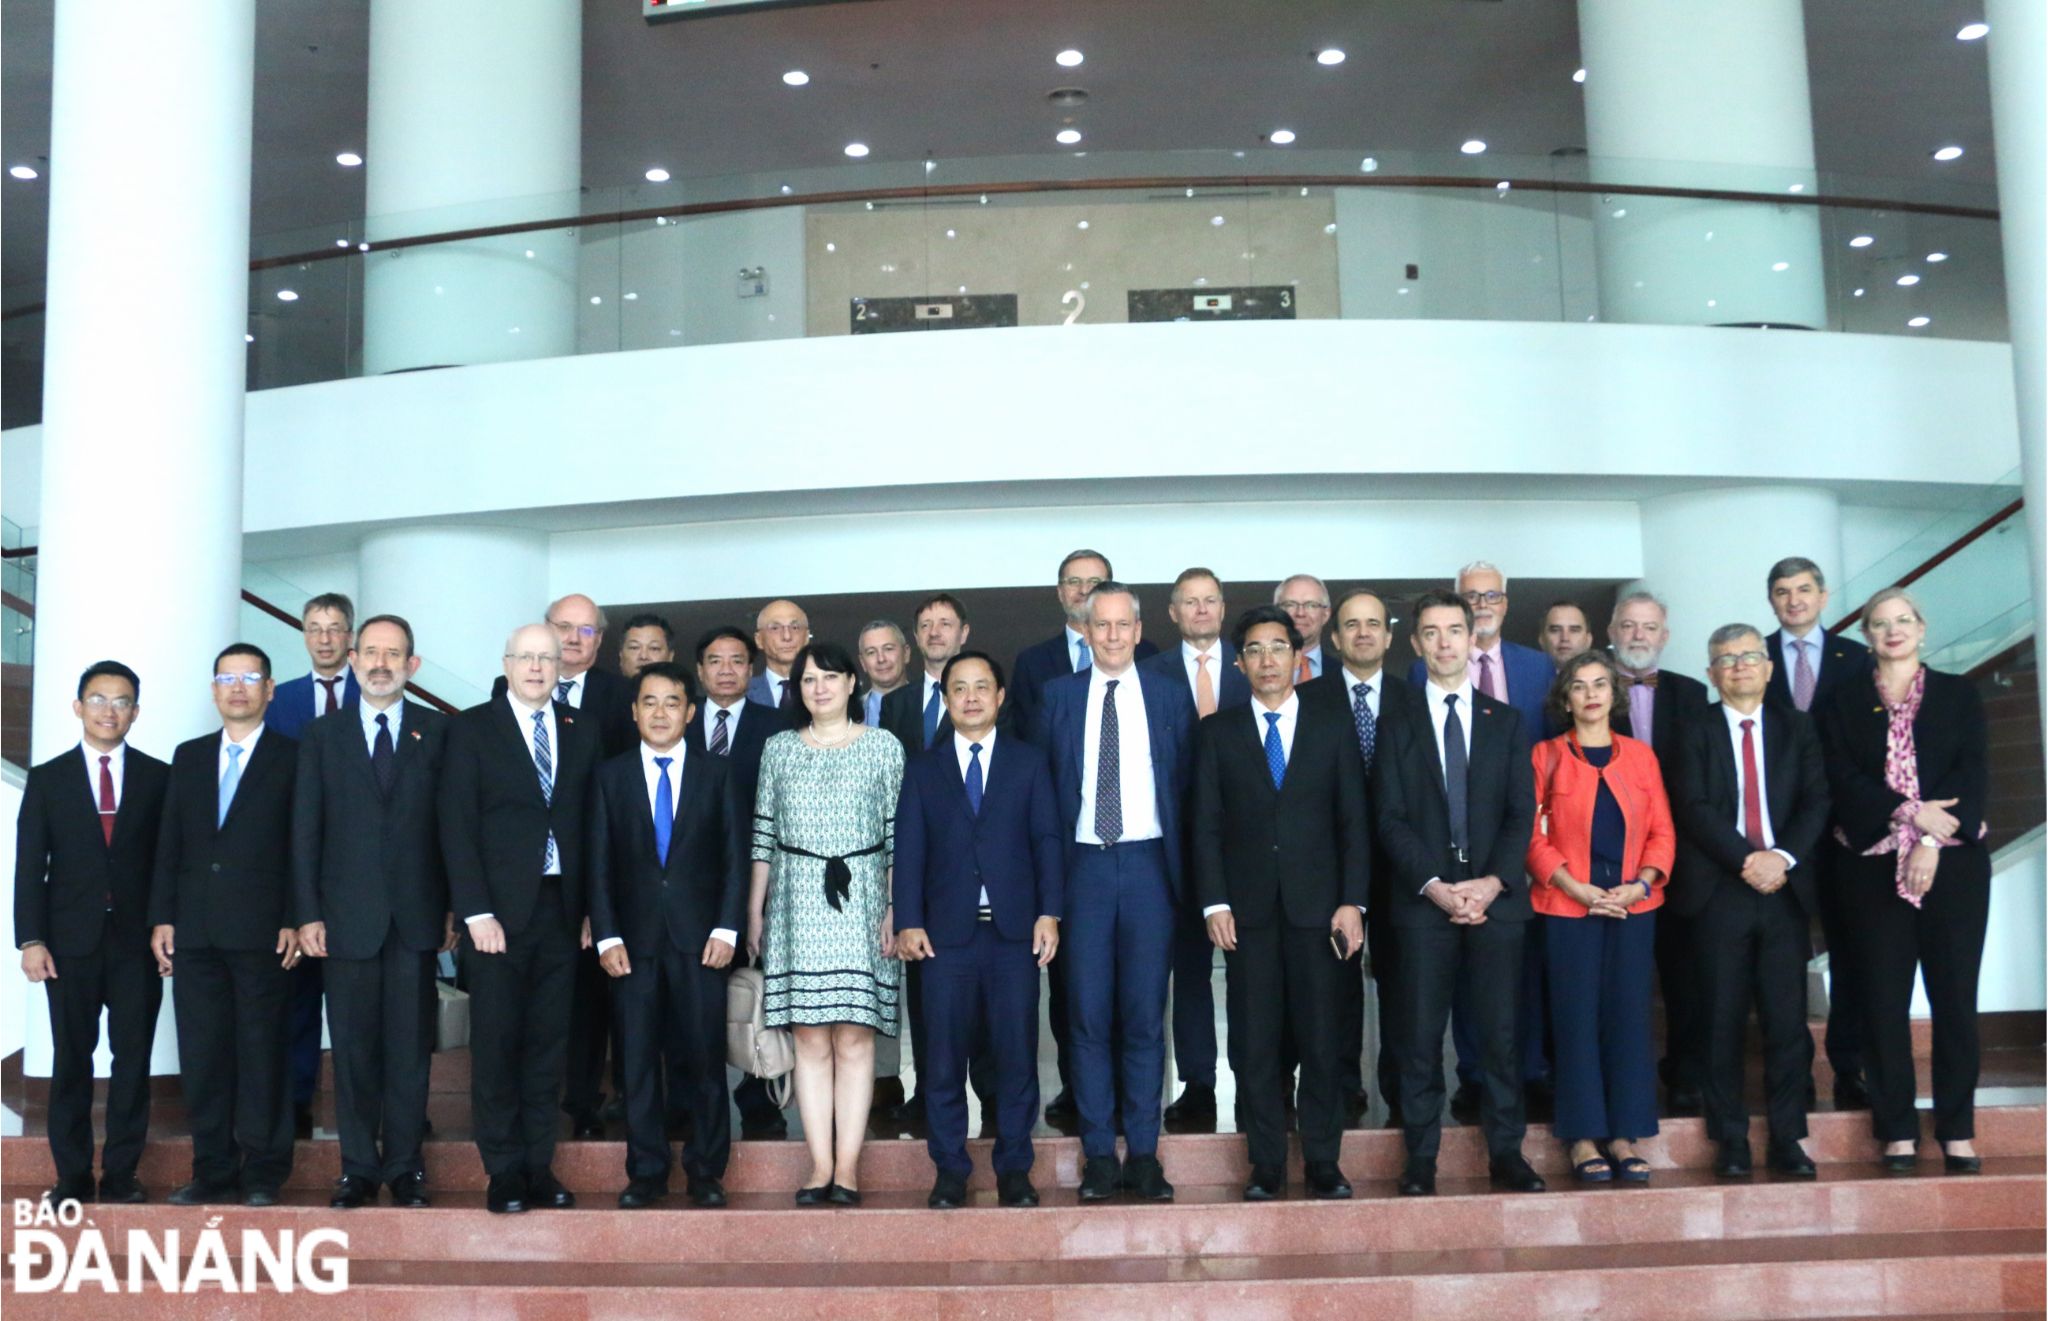 The EU delegation and leaders of Da Nang posing for a souvenir photo. Photo: T.PHUONG